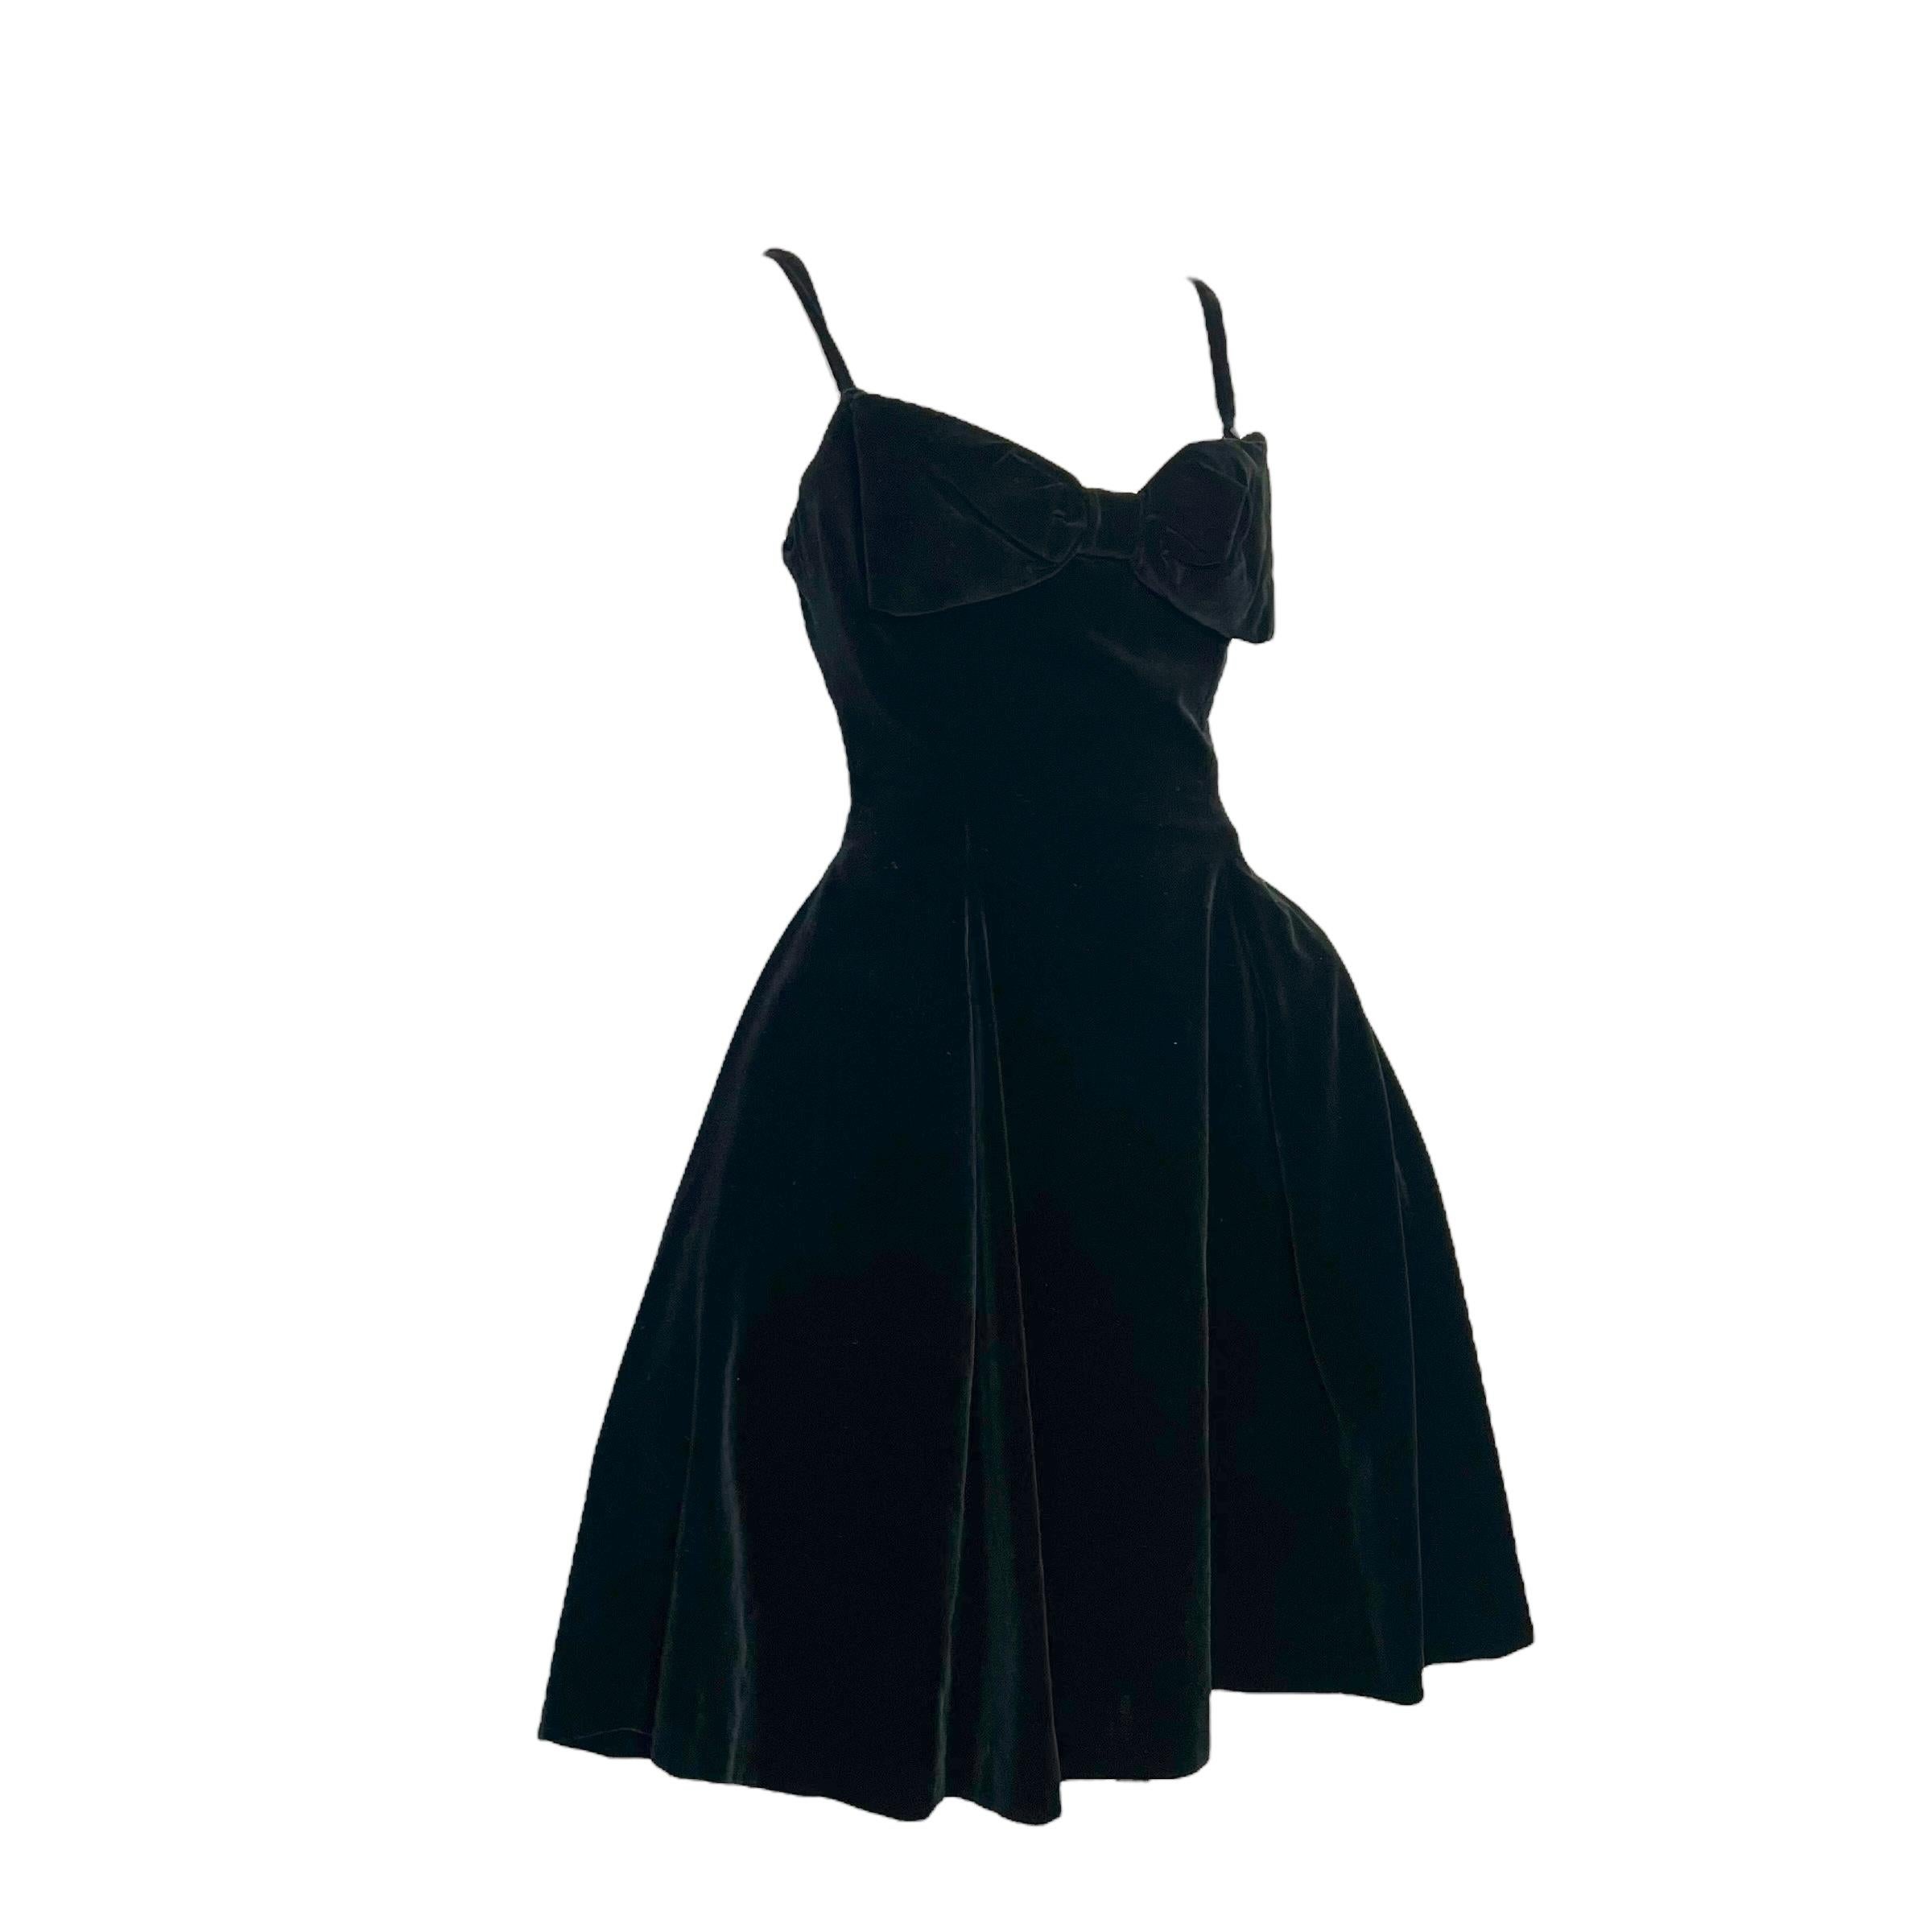 Black Vivienne Westwood 1999 velvet bow dress, with hip pads